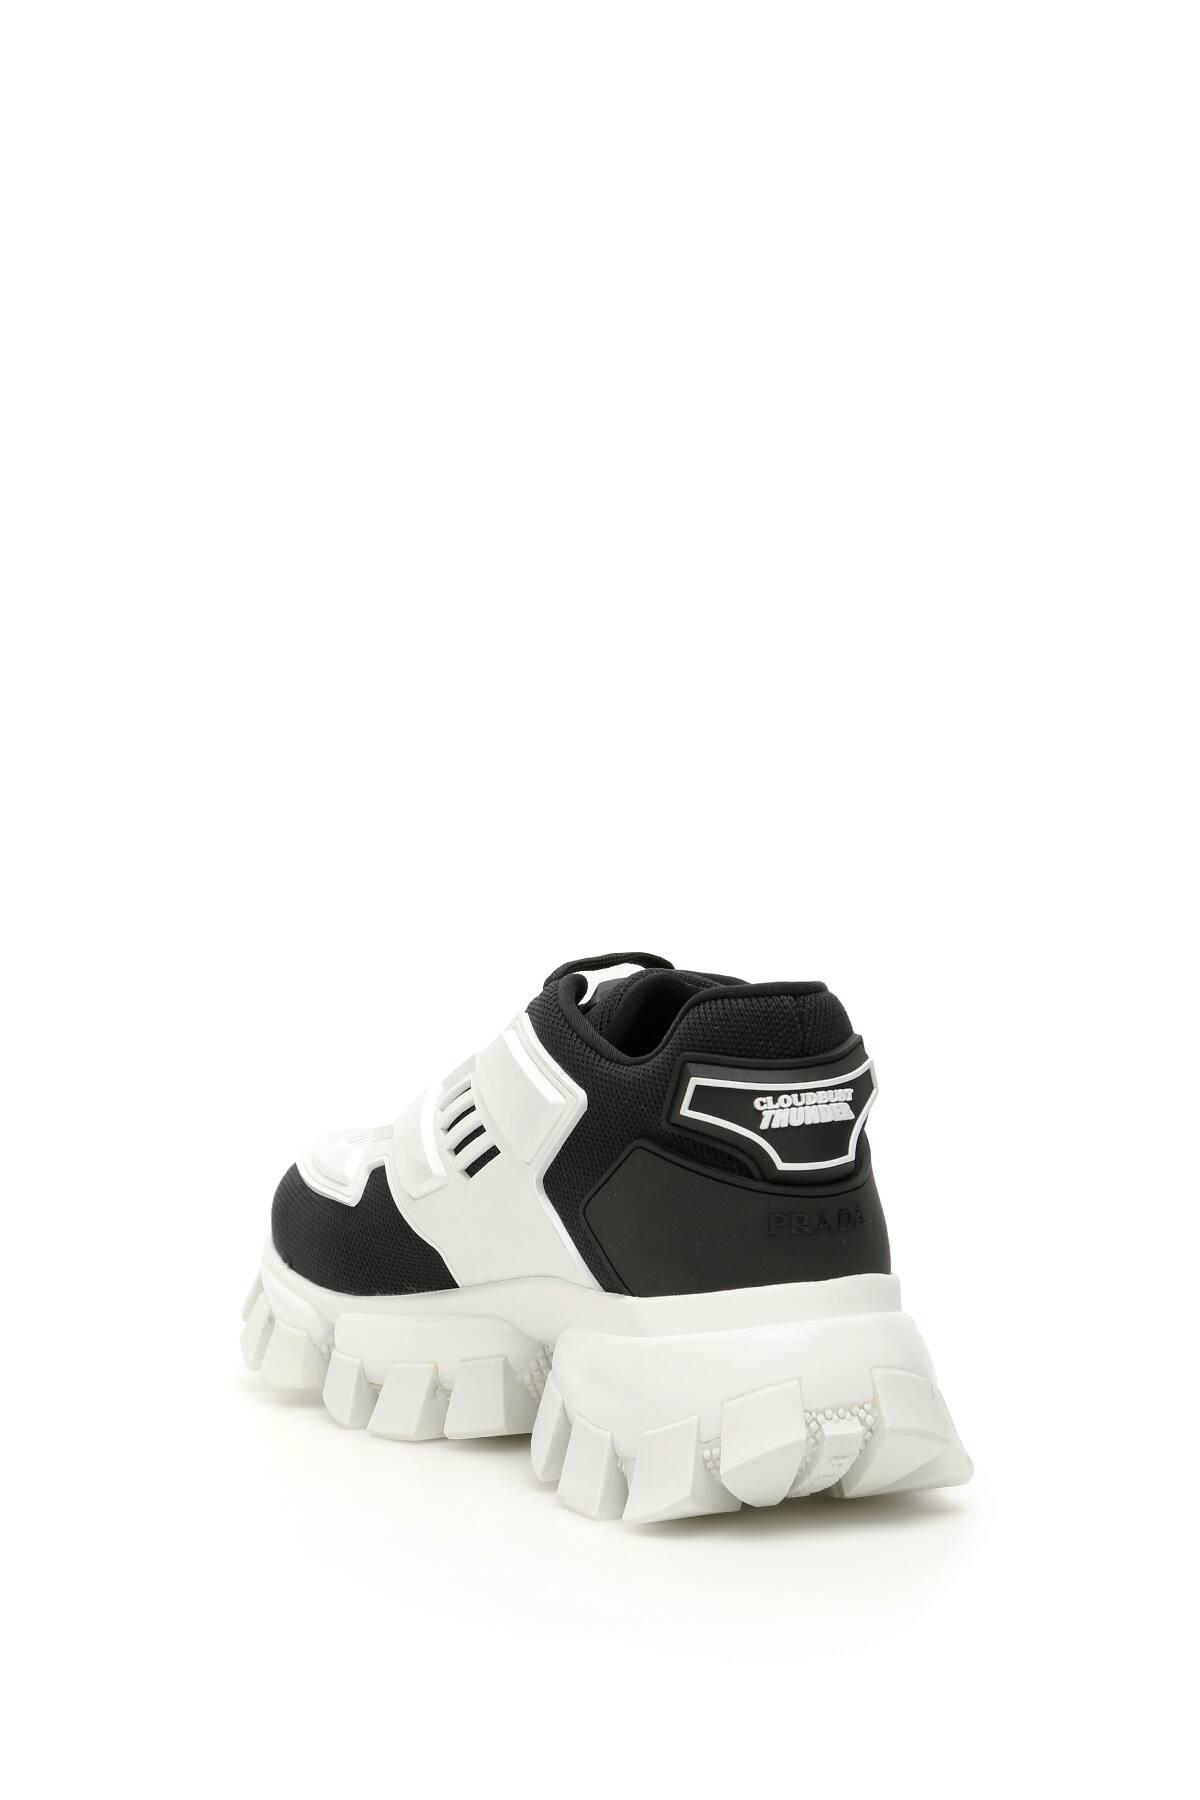 Prada Cloudbust Thunder Sneakers in White,Black (Black) | Lyst